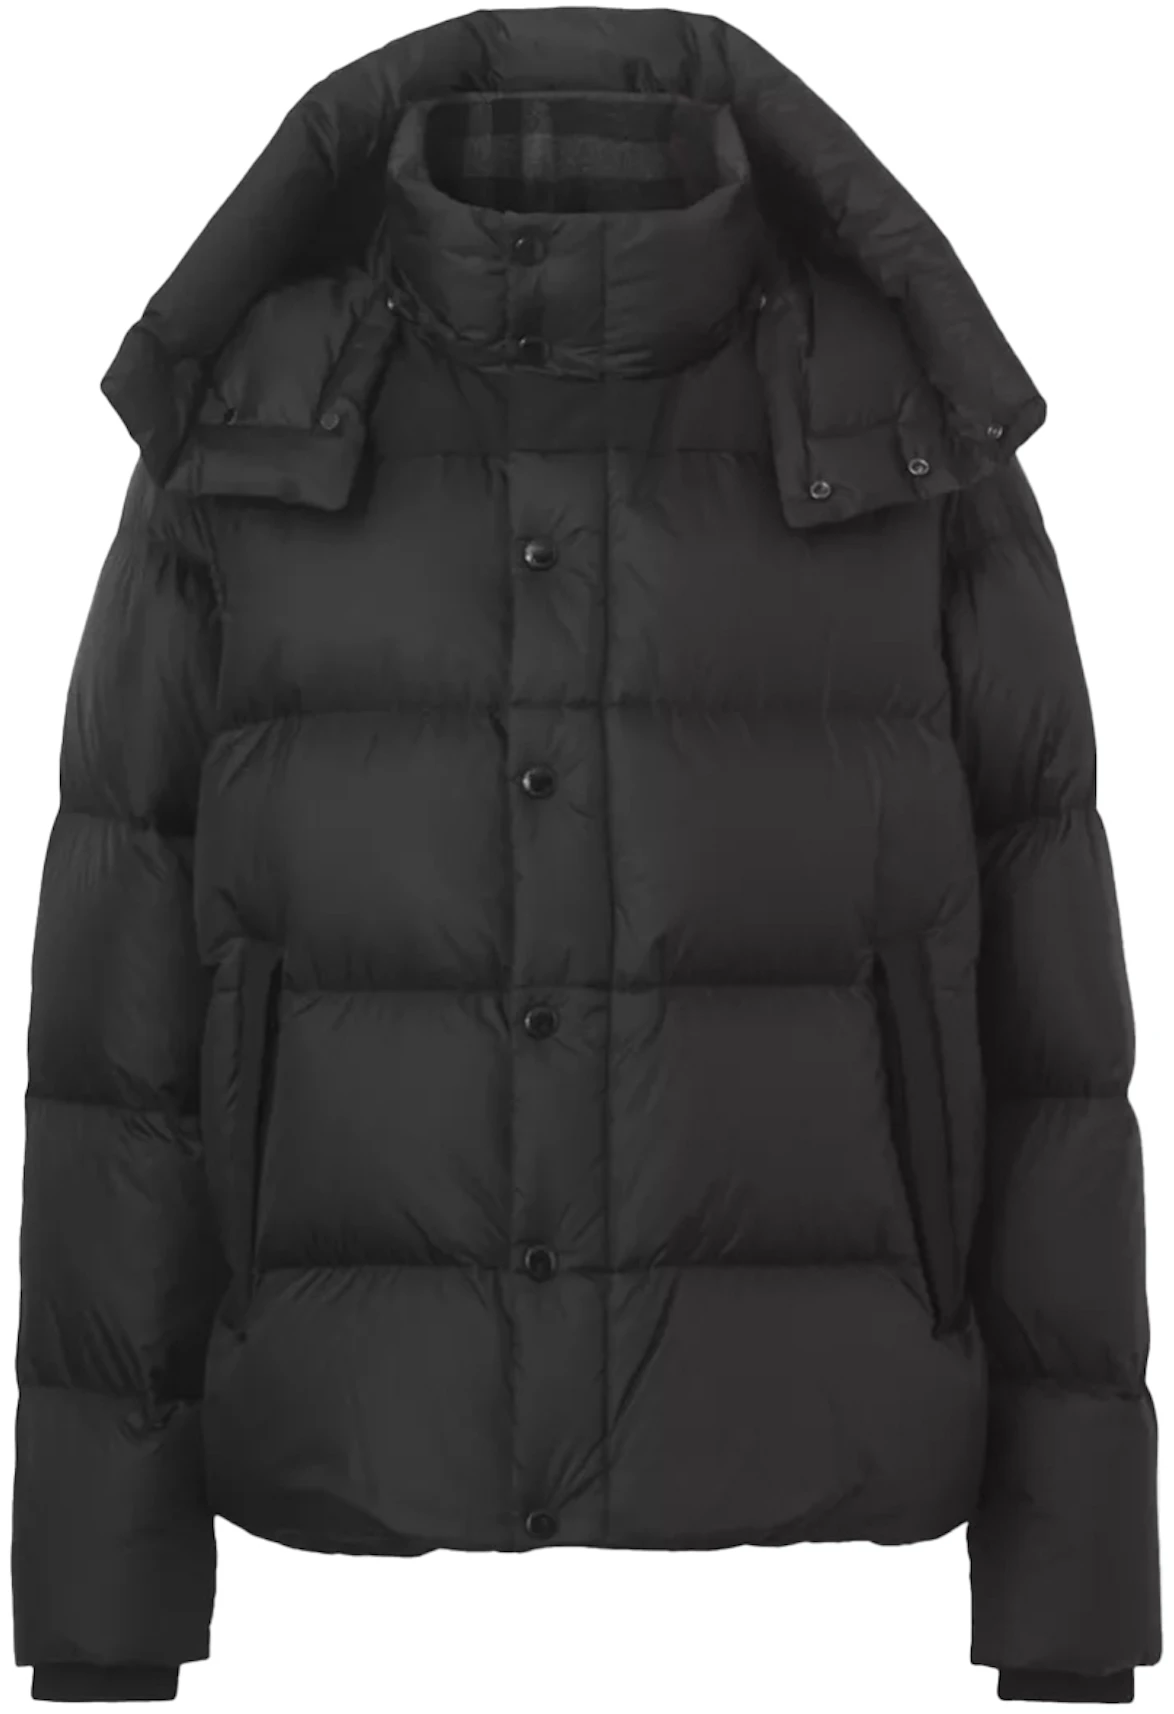 Burberry Detachable Sleeve Hooded Puffer Jacket Black - US